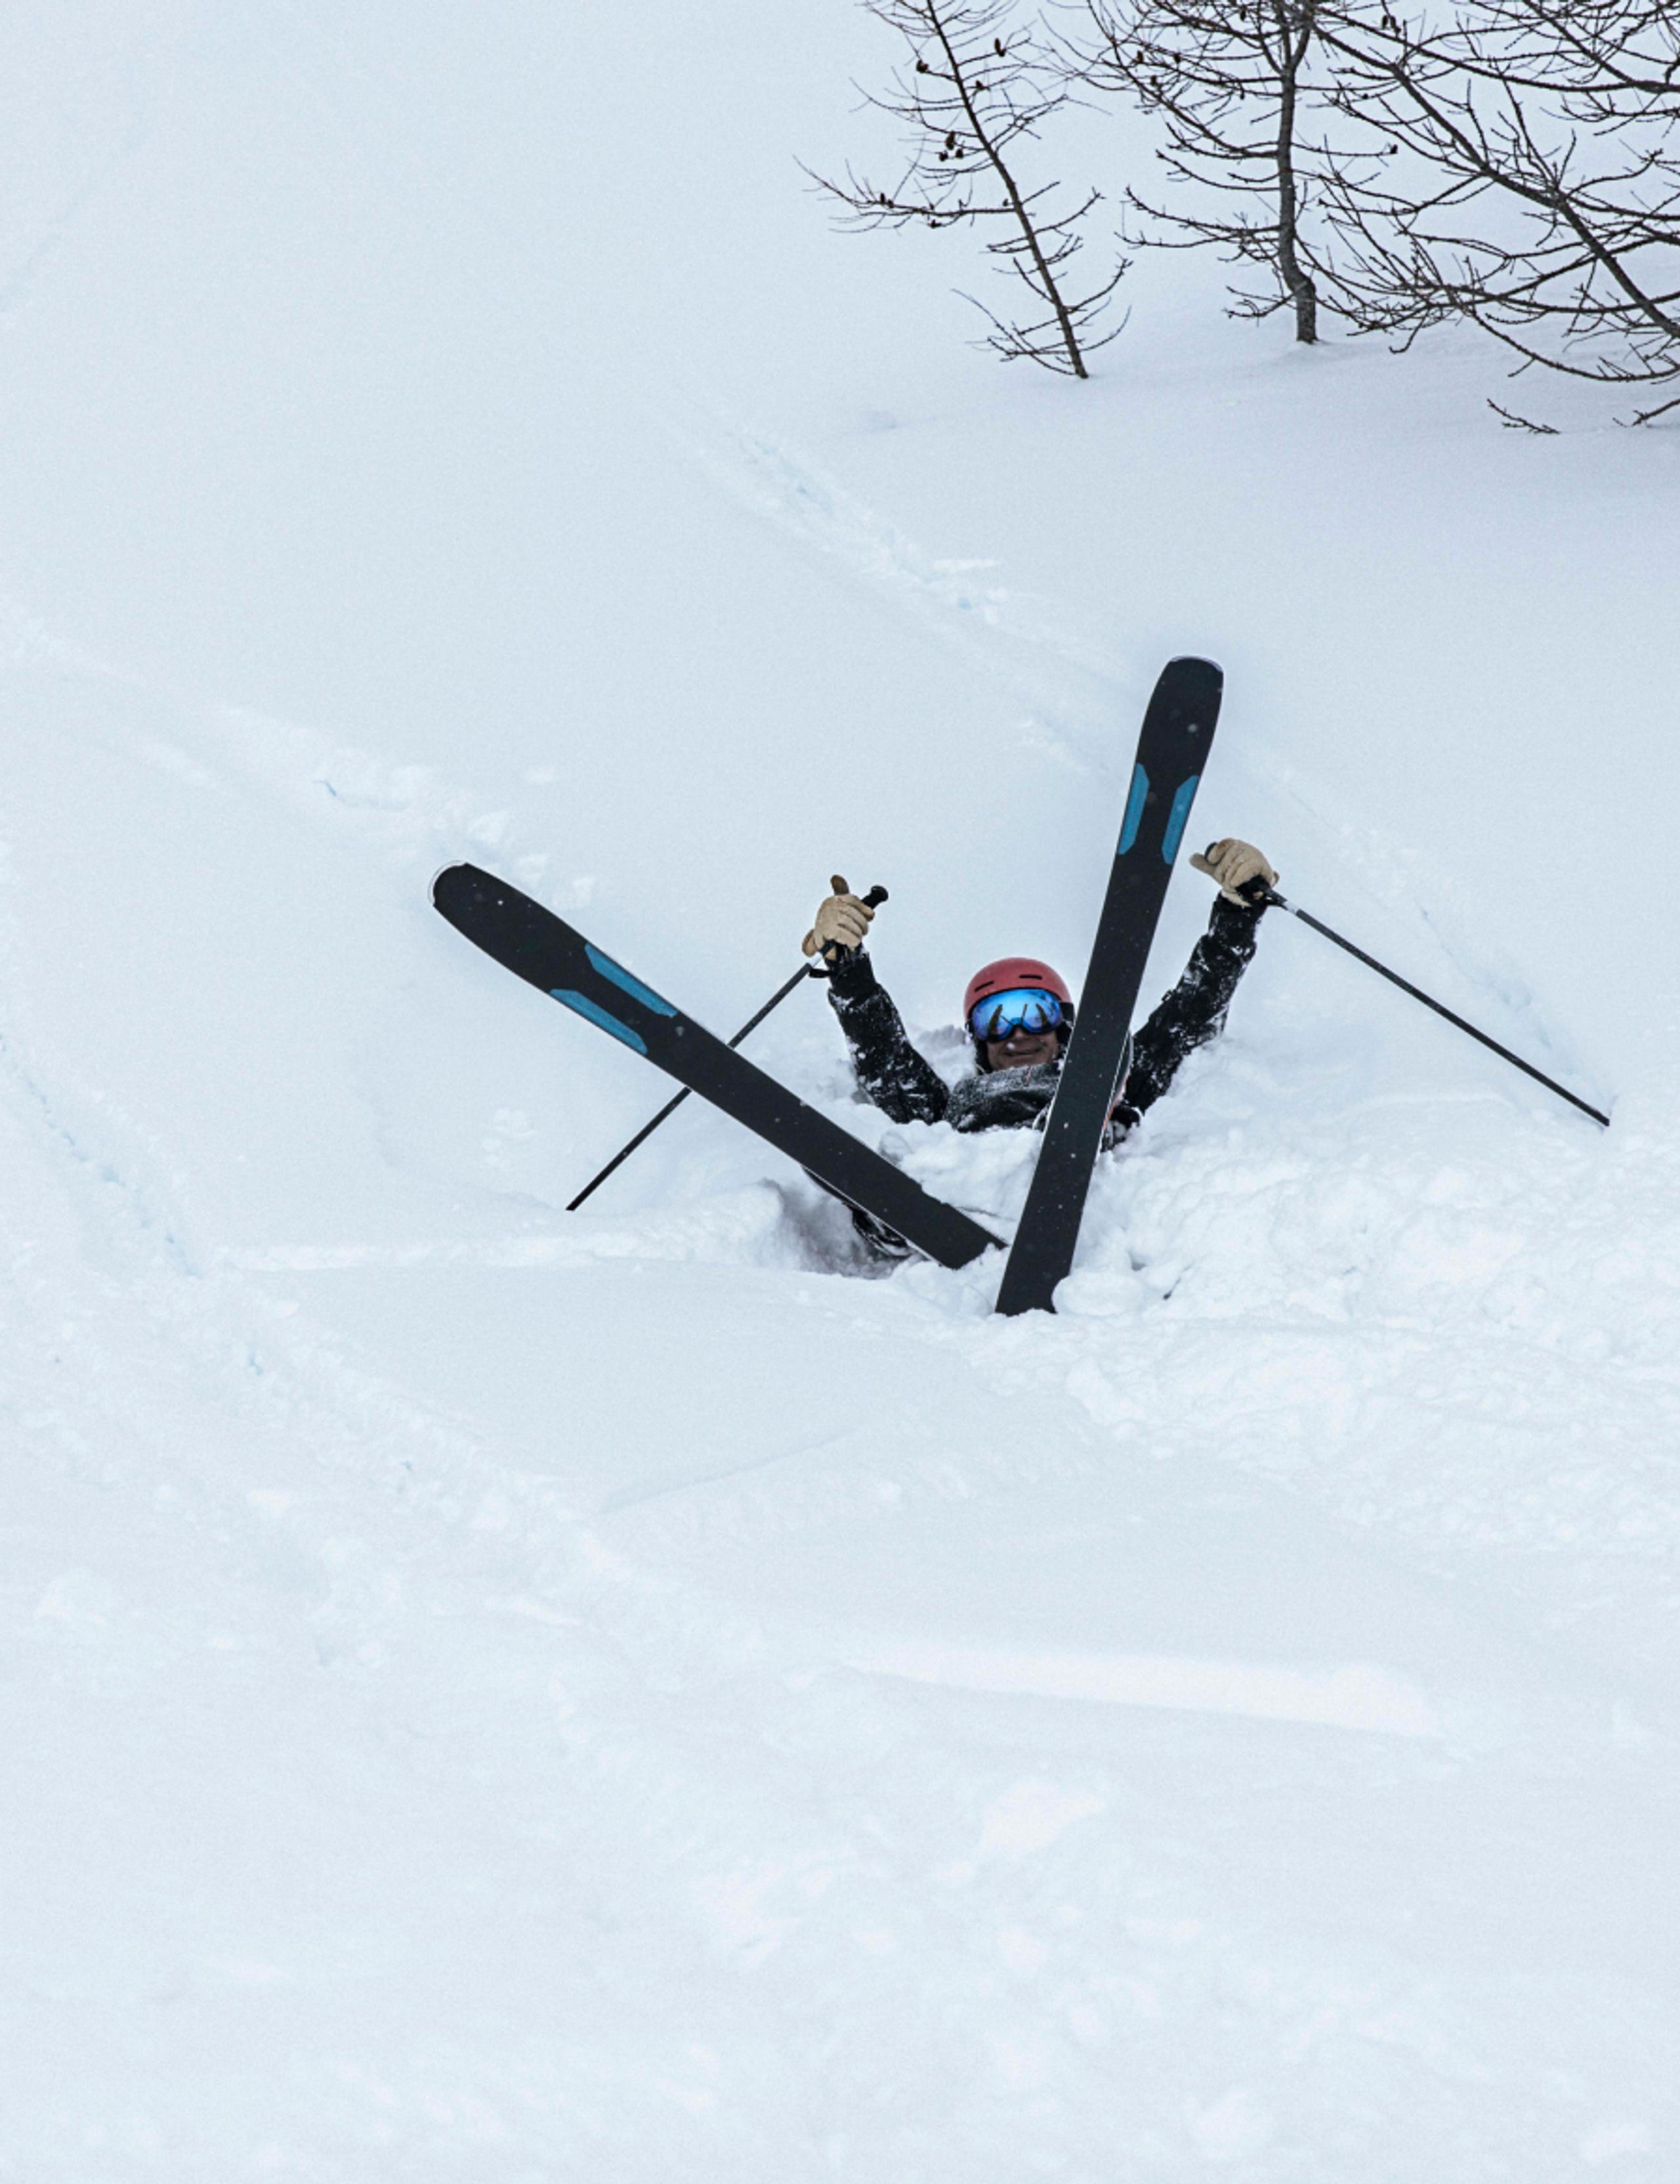 Skier fallen in deep snow smiling